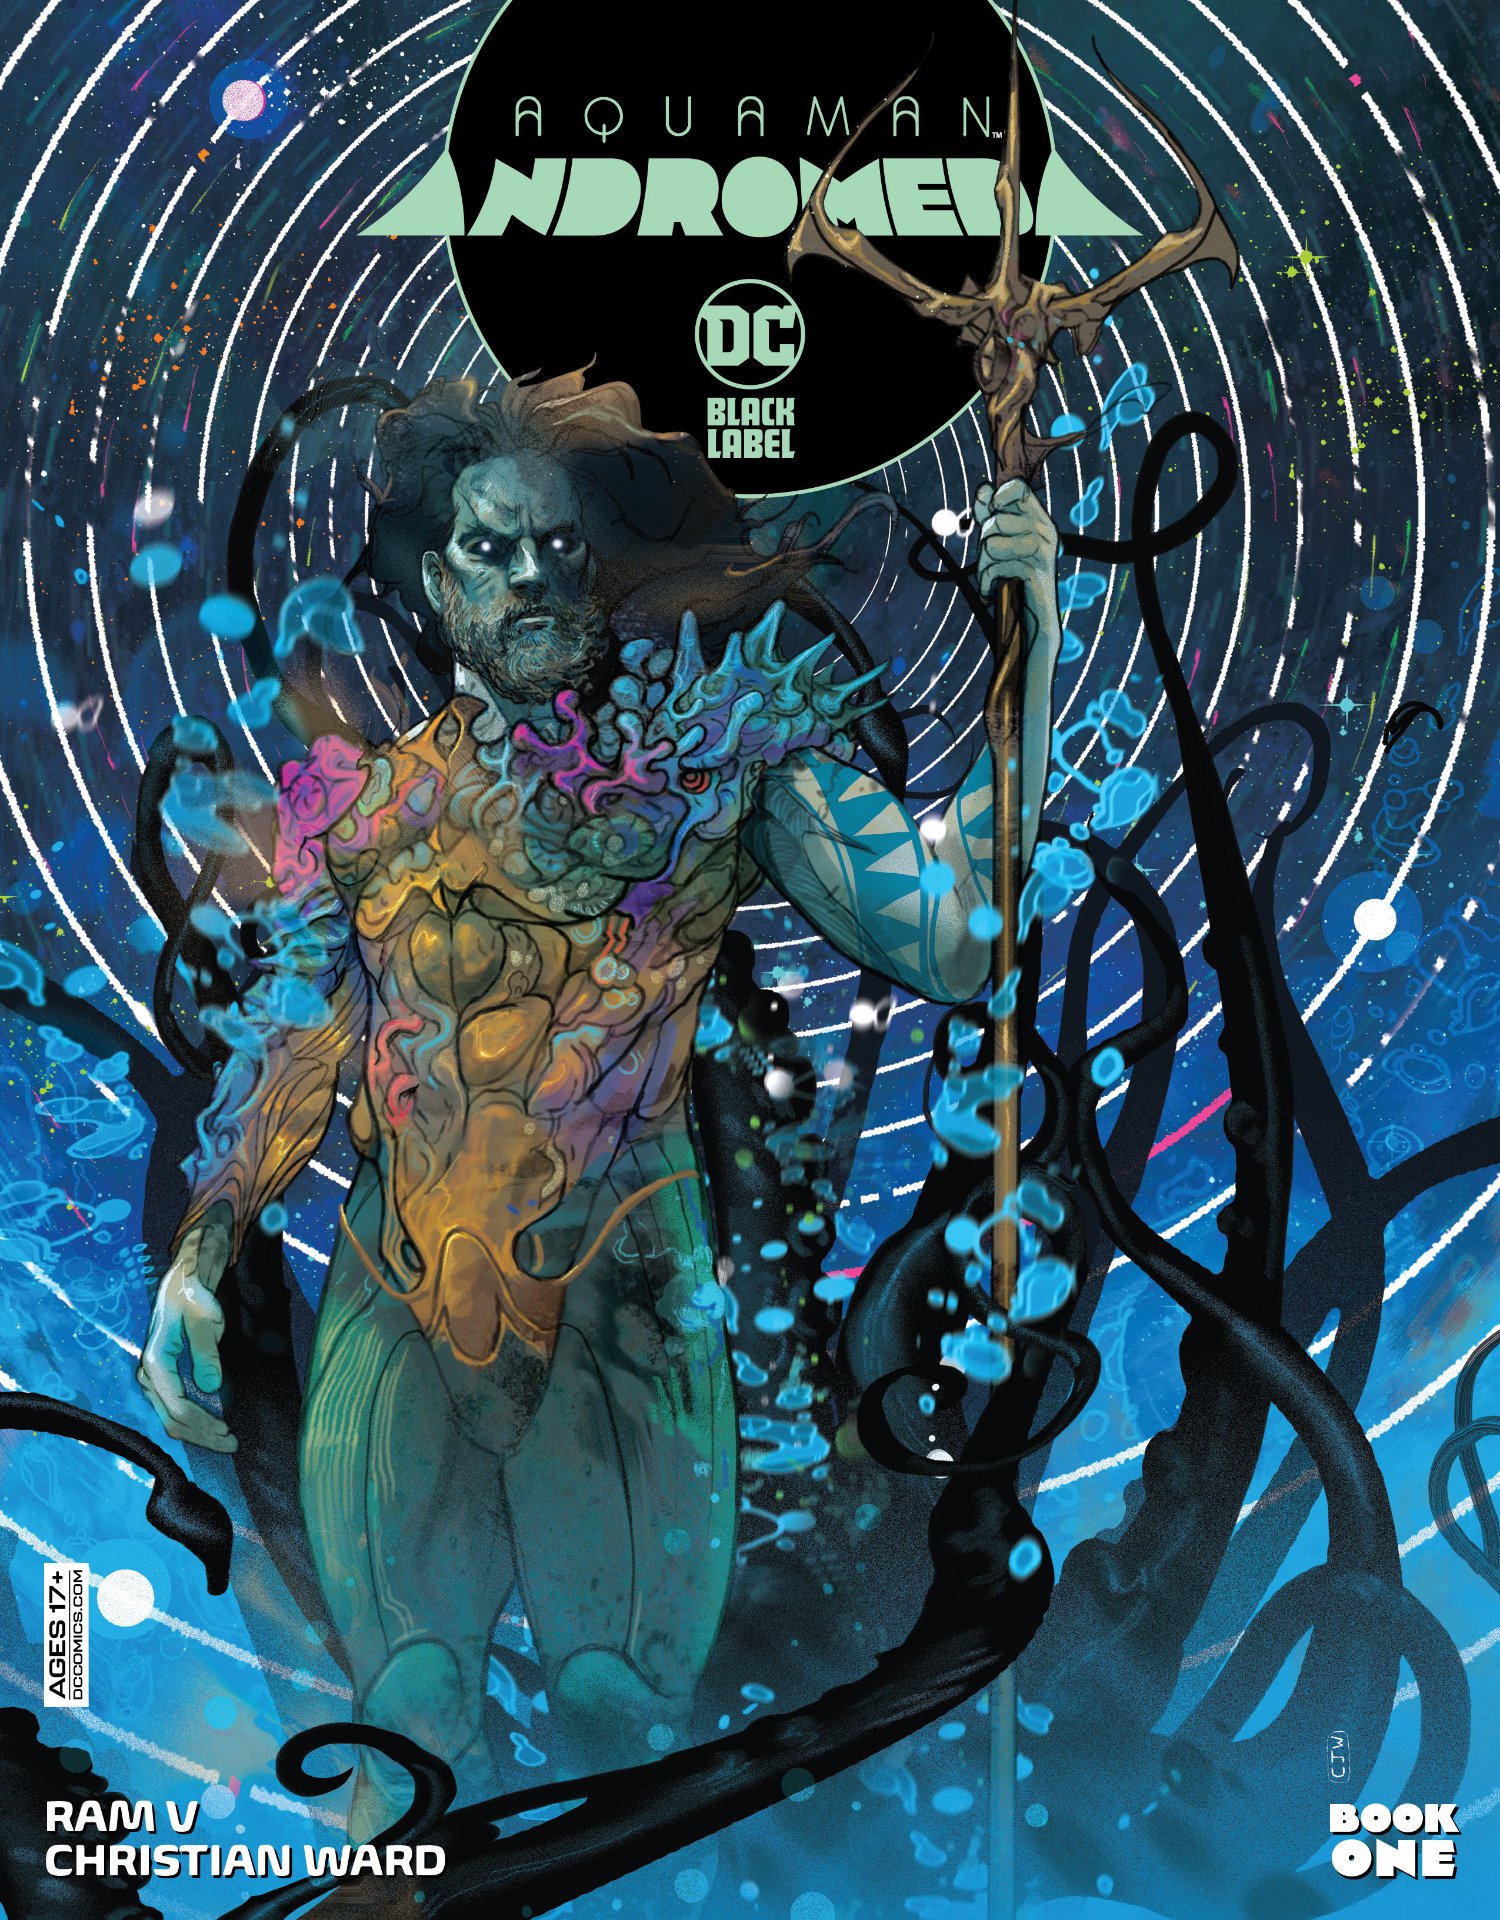 Aquaman: Andromeda #1 cover